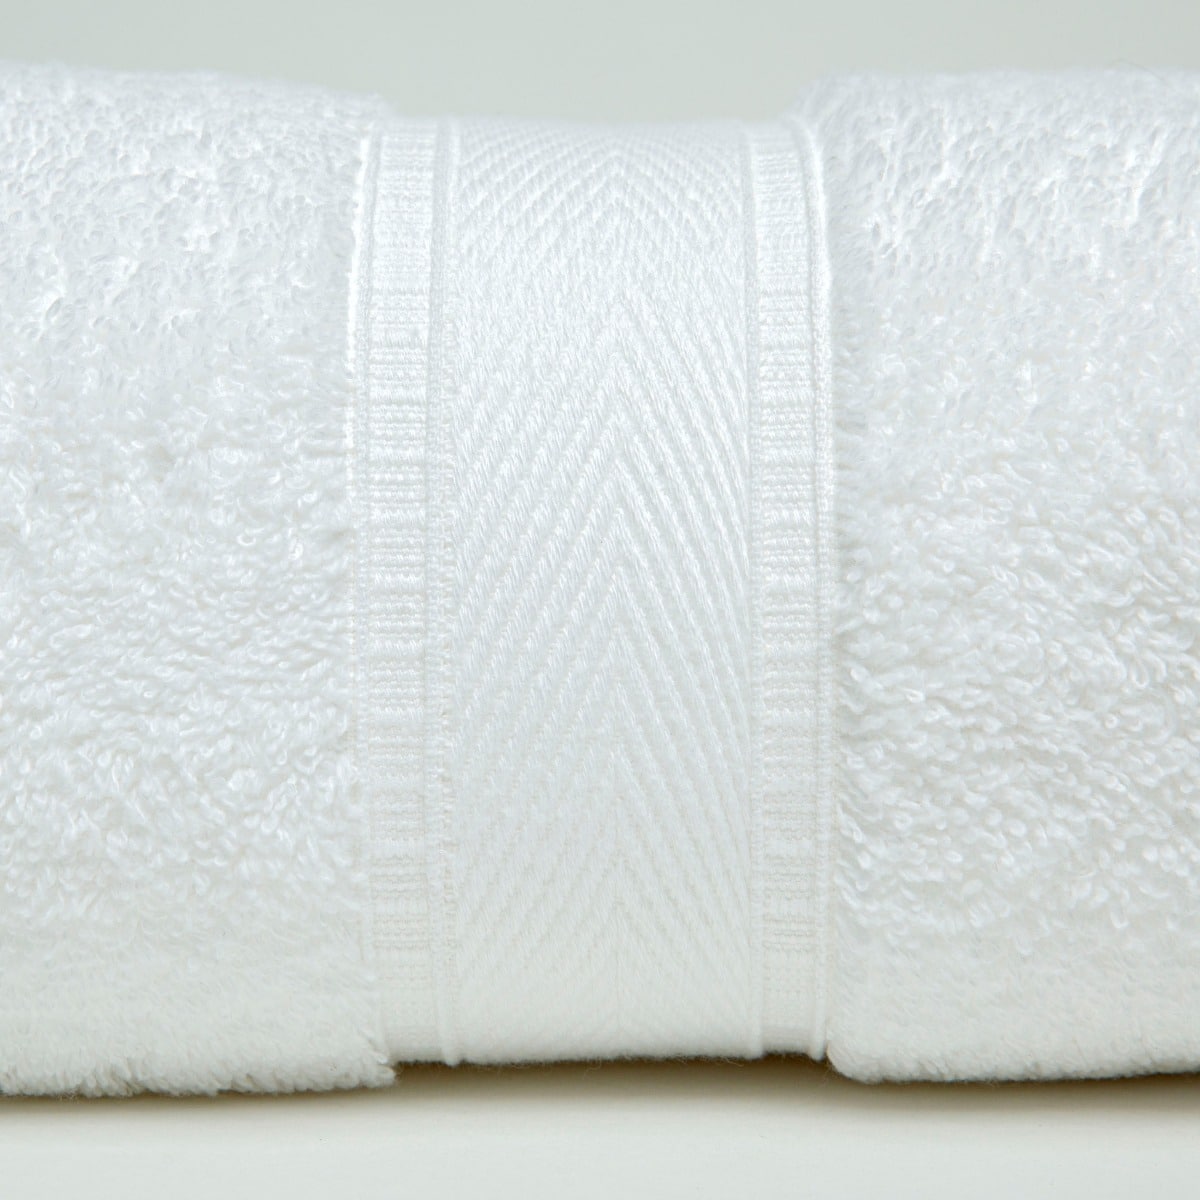 Oasis Towels : Wholesale White Blue Stripe Satin Border Organic Towels  Manufacturer In USA,UK